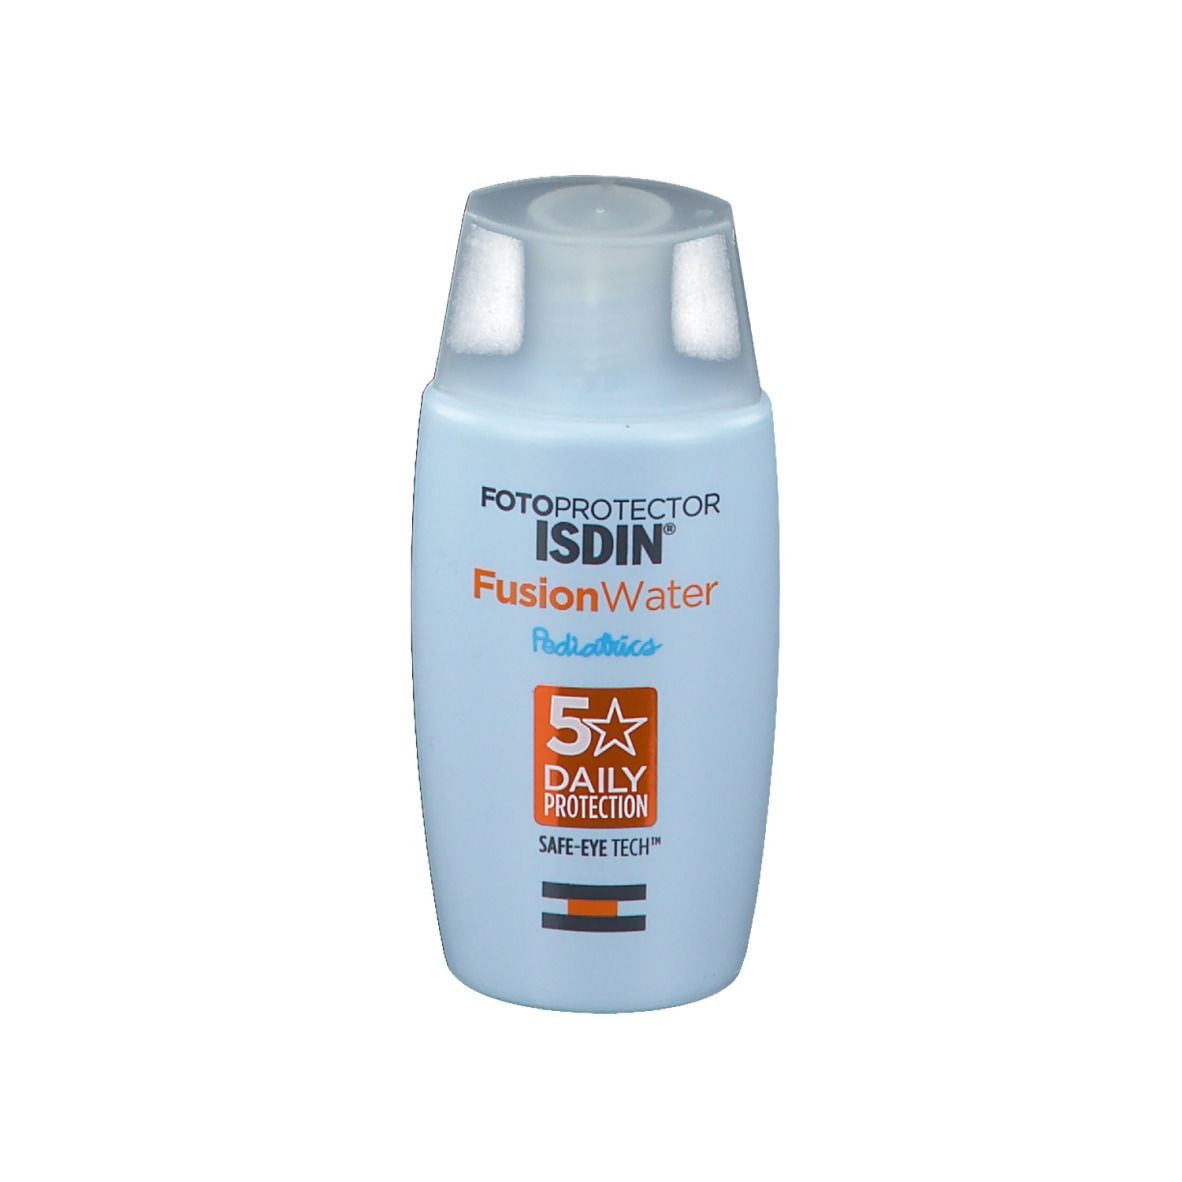 Fotoprotector ISDIN® Pediatrics FusionWater LSF 50+